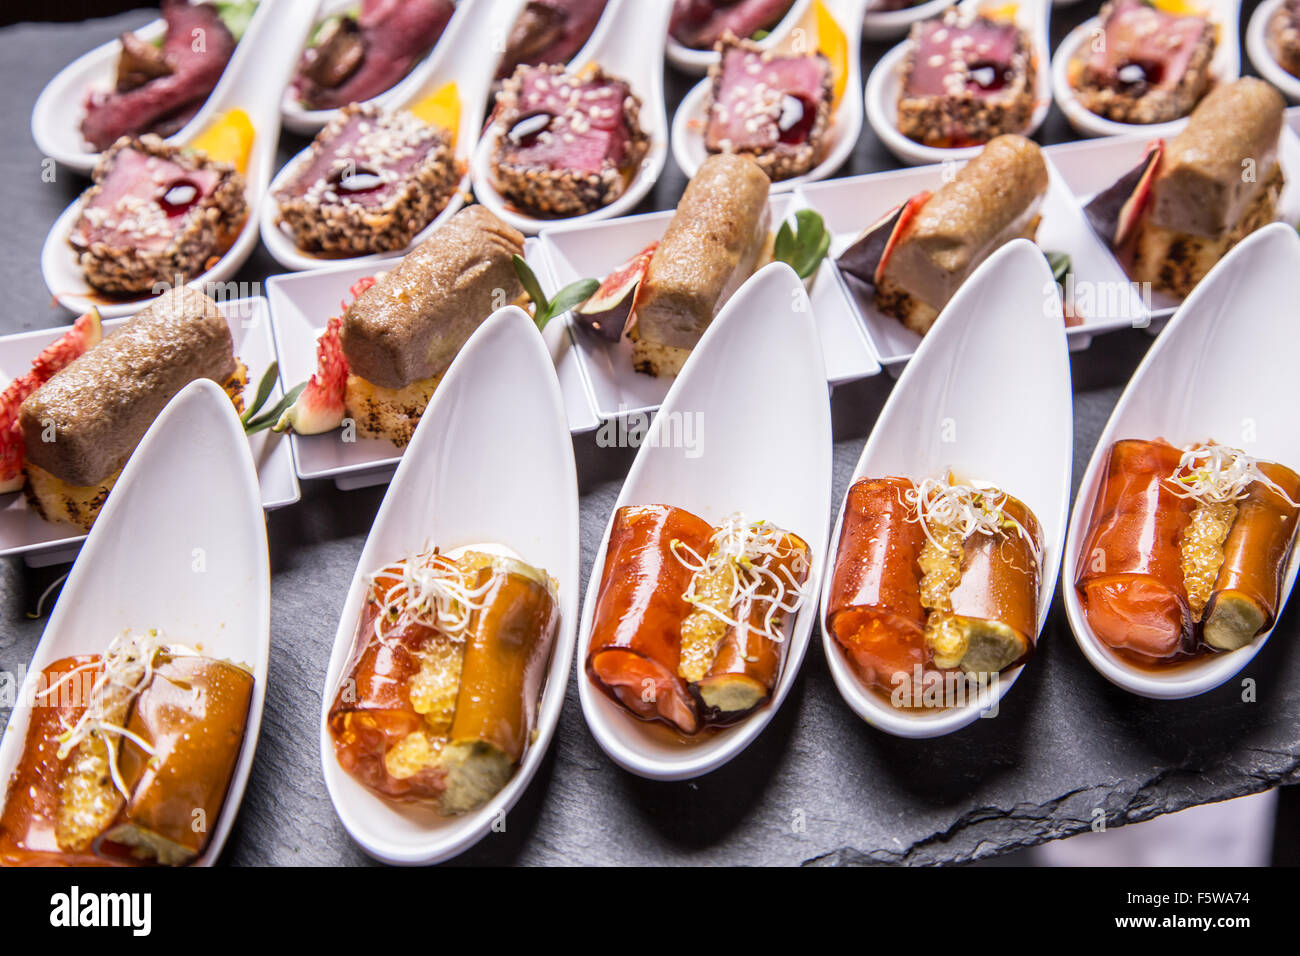 Gourmet appetizers: foie gras, venison, tuna and salmon. Stock Photo